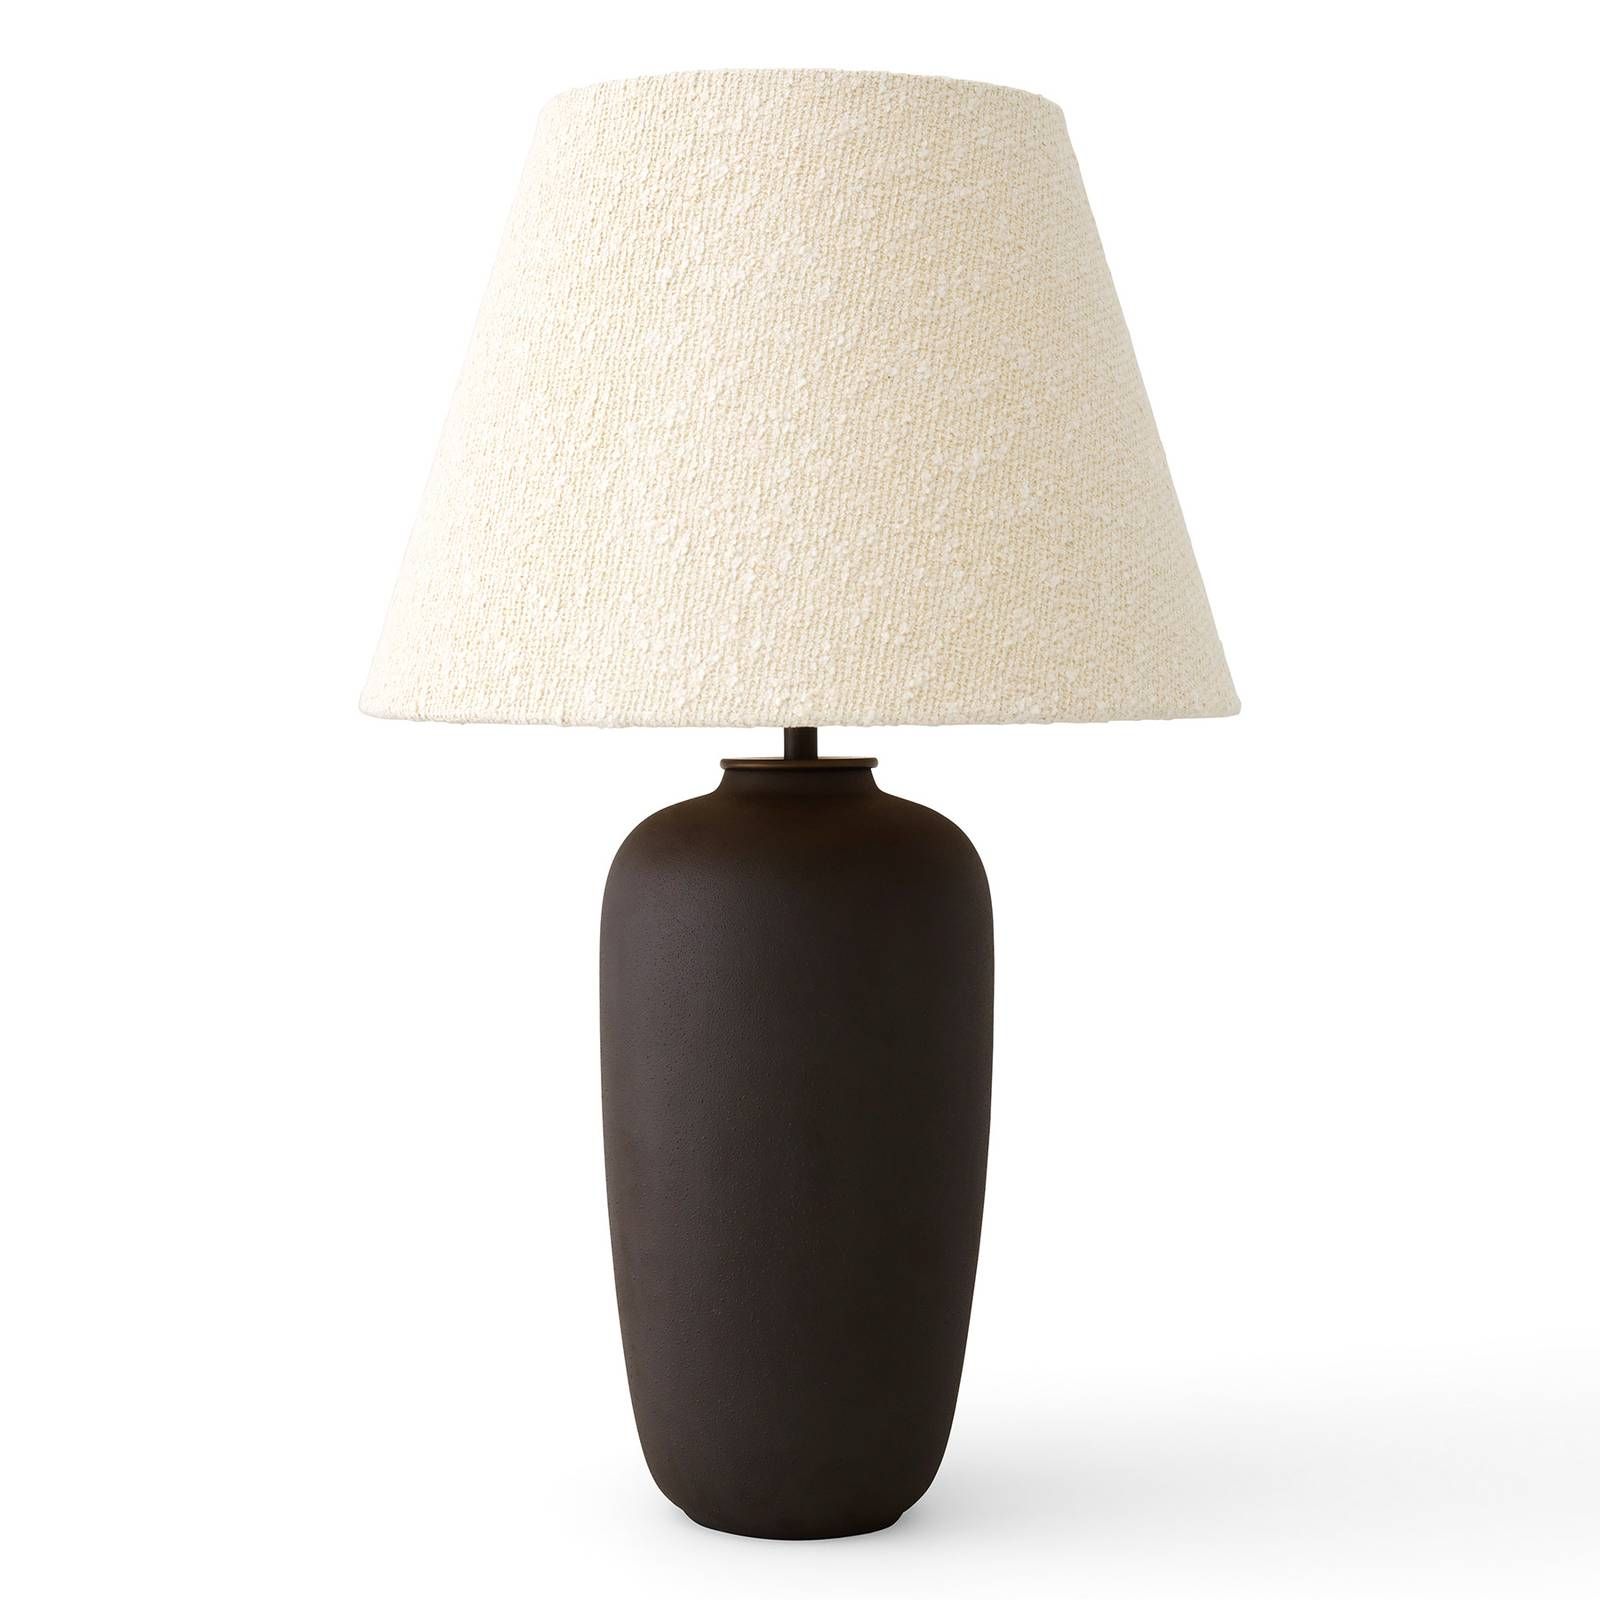 Audo Copenhagen Torso stolová LED lampa, hnedá/biela, 57 cm, Obývacia izba / jedáleň, keramika, textil dedar, mosadz, oceľ, E27, 6W, K: 57cm